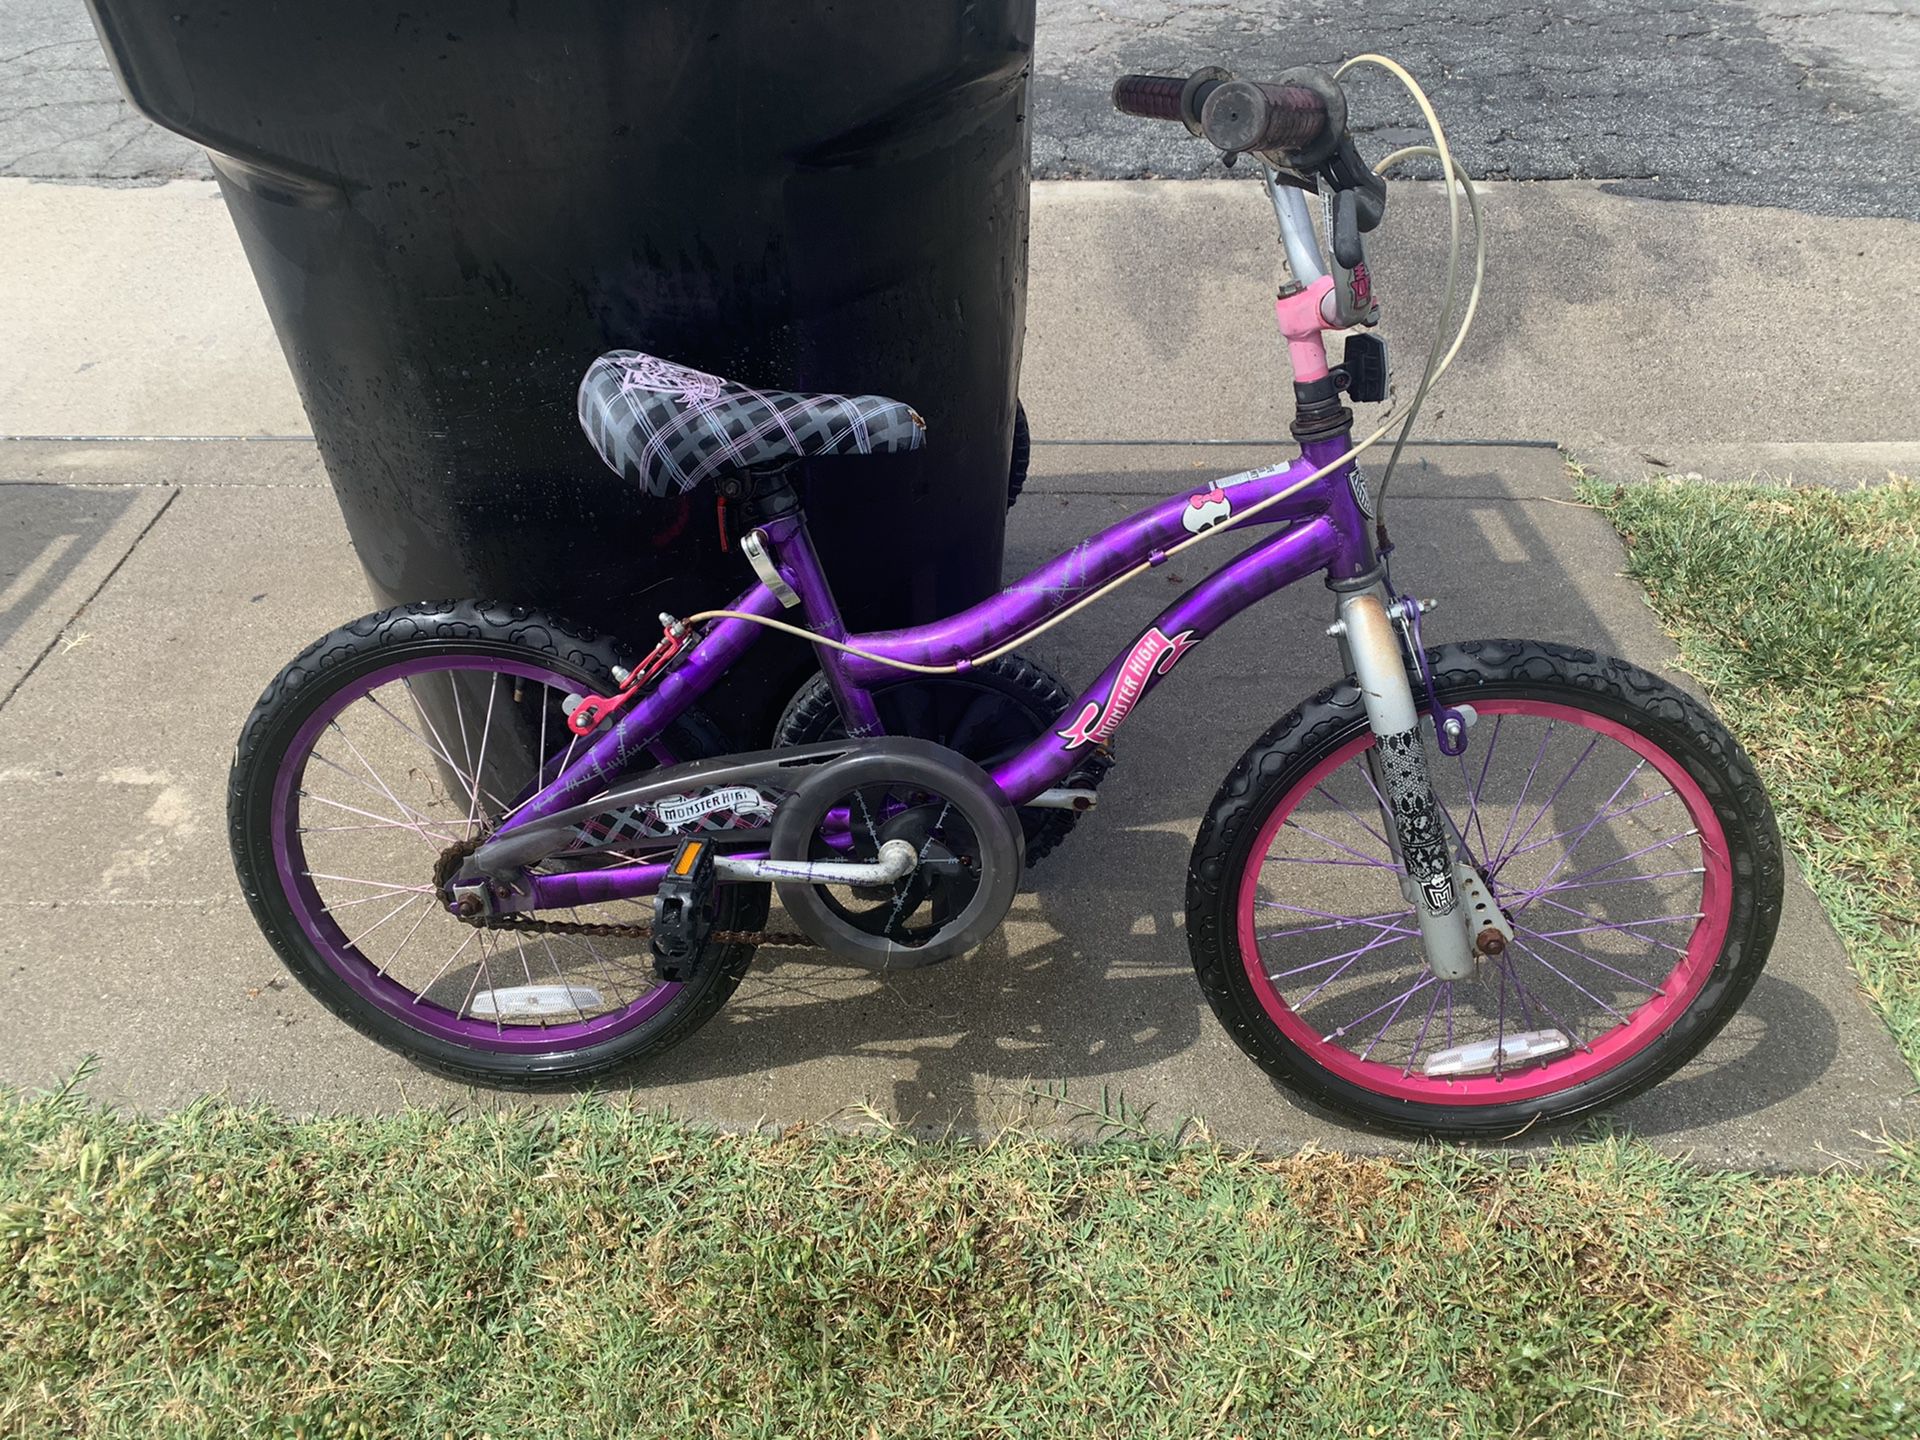 Monster High 18” girls bike ready to ride $30